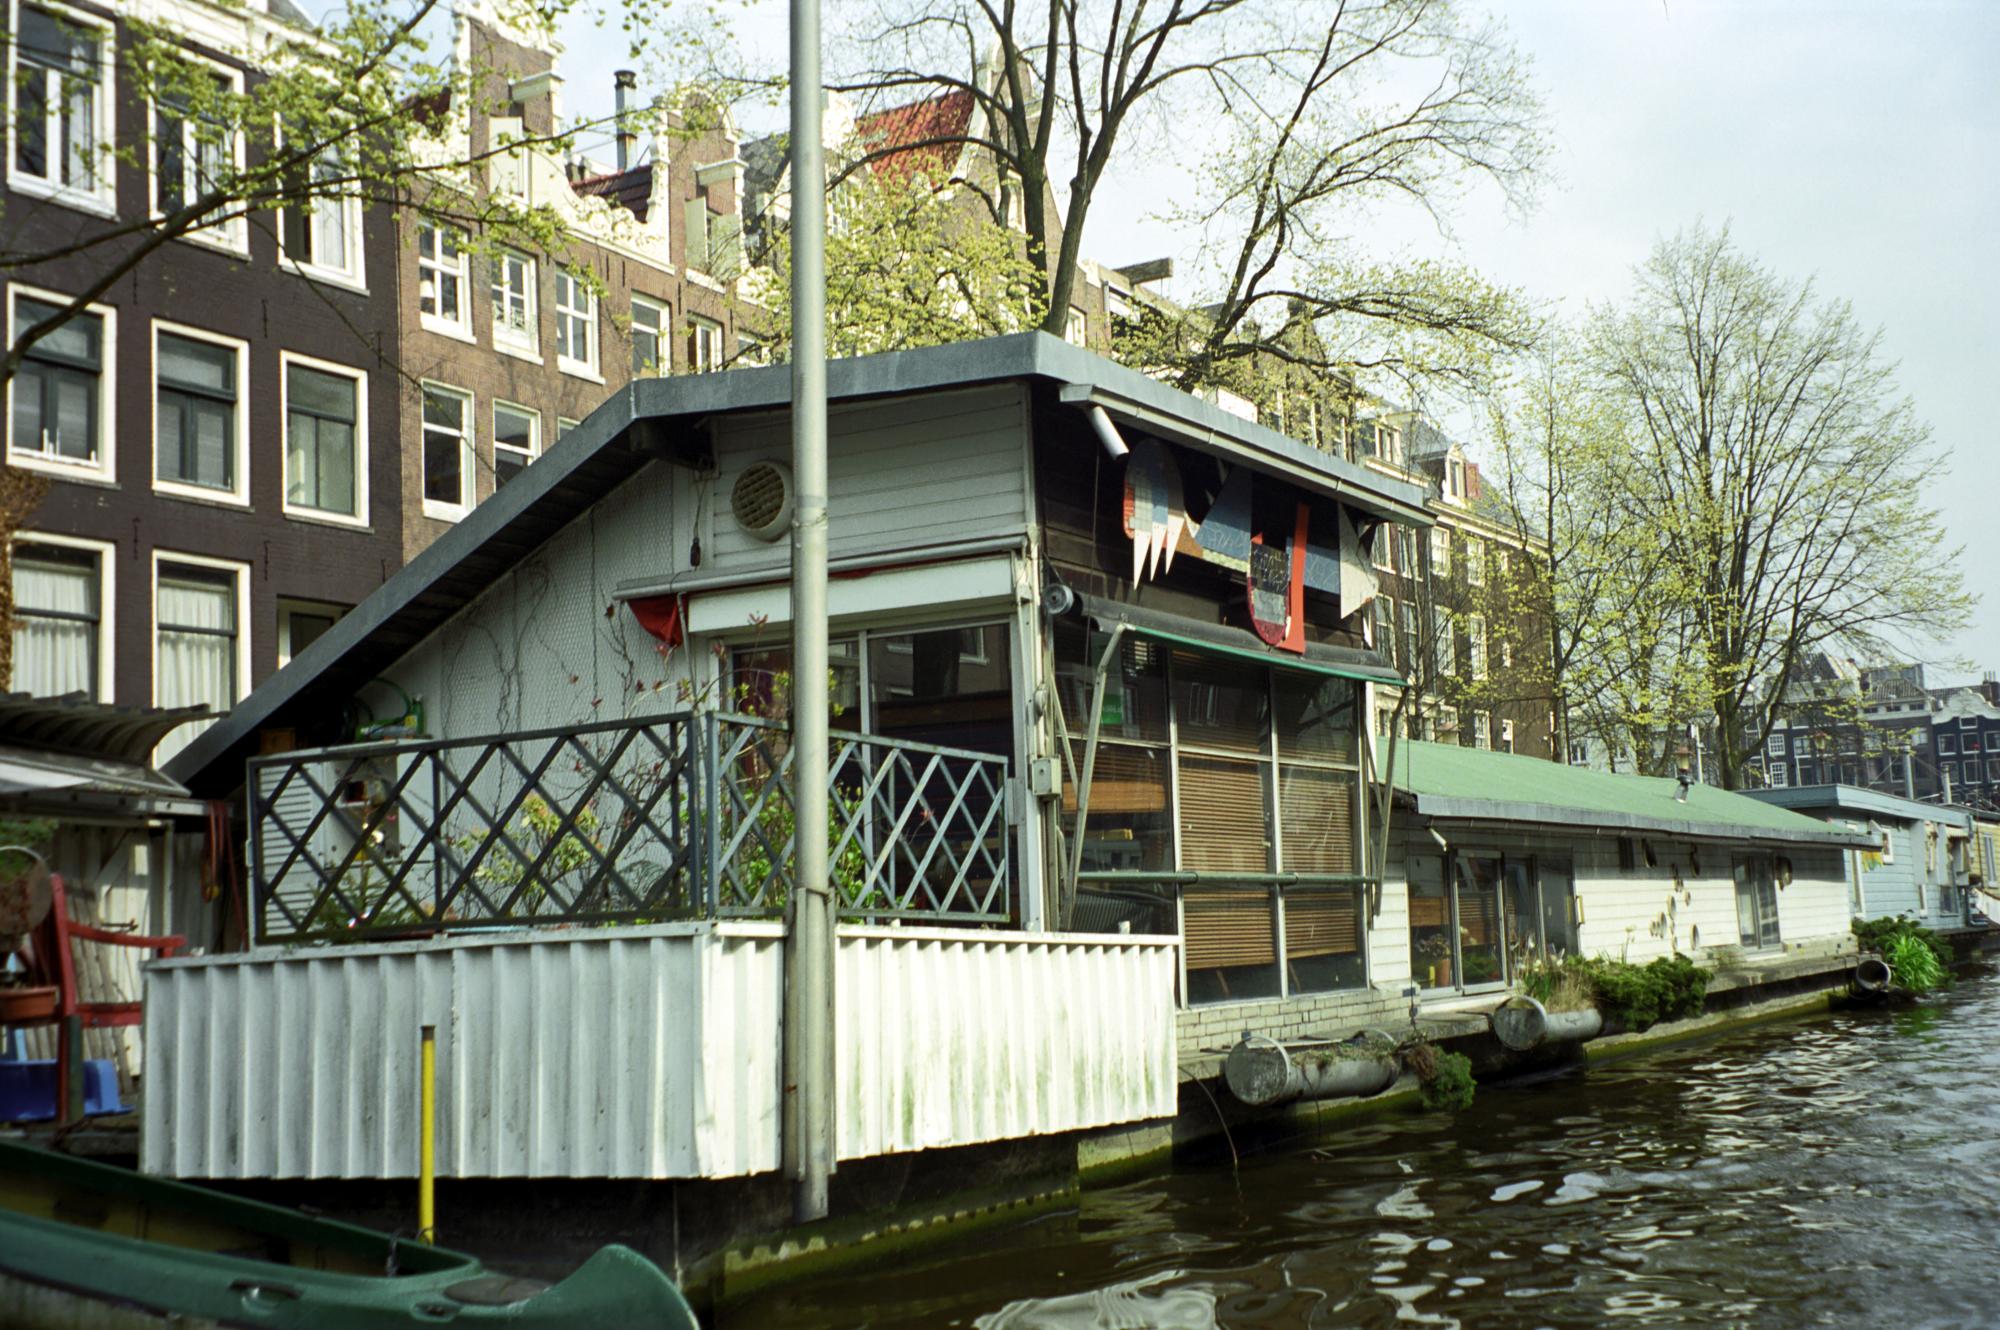 The Netherlands - Houseboat Amsterdam #1